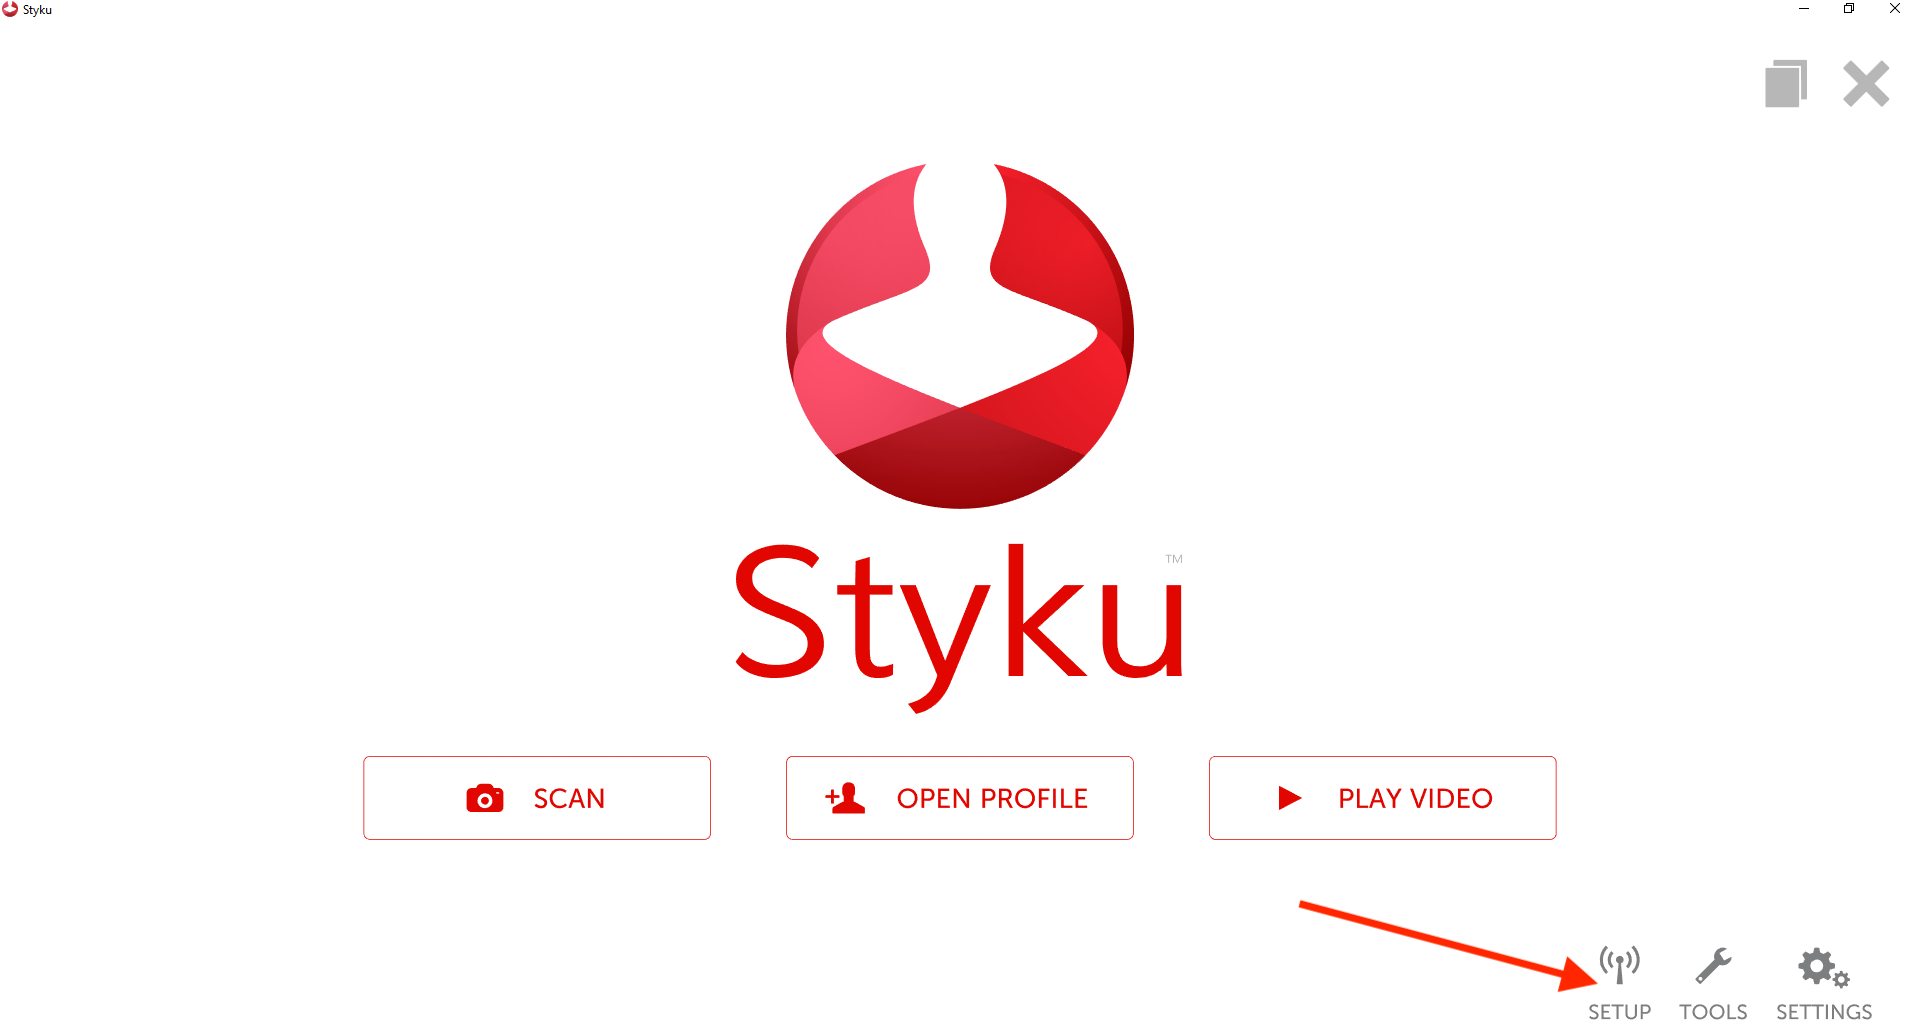 Styku Homepage Setup Tab